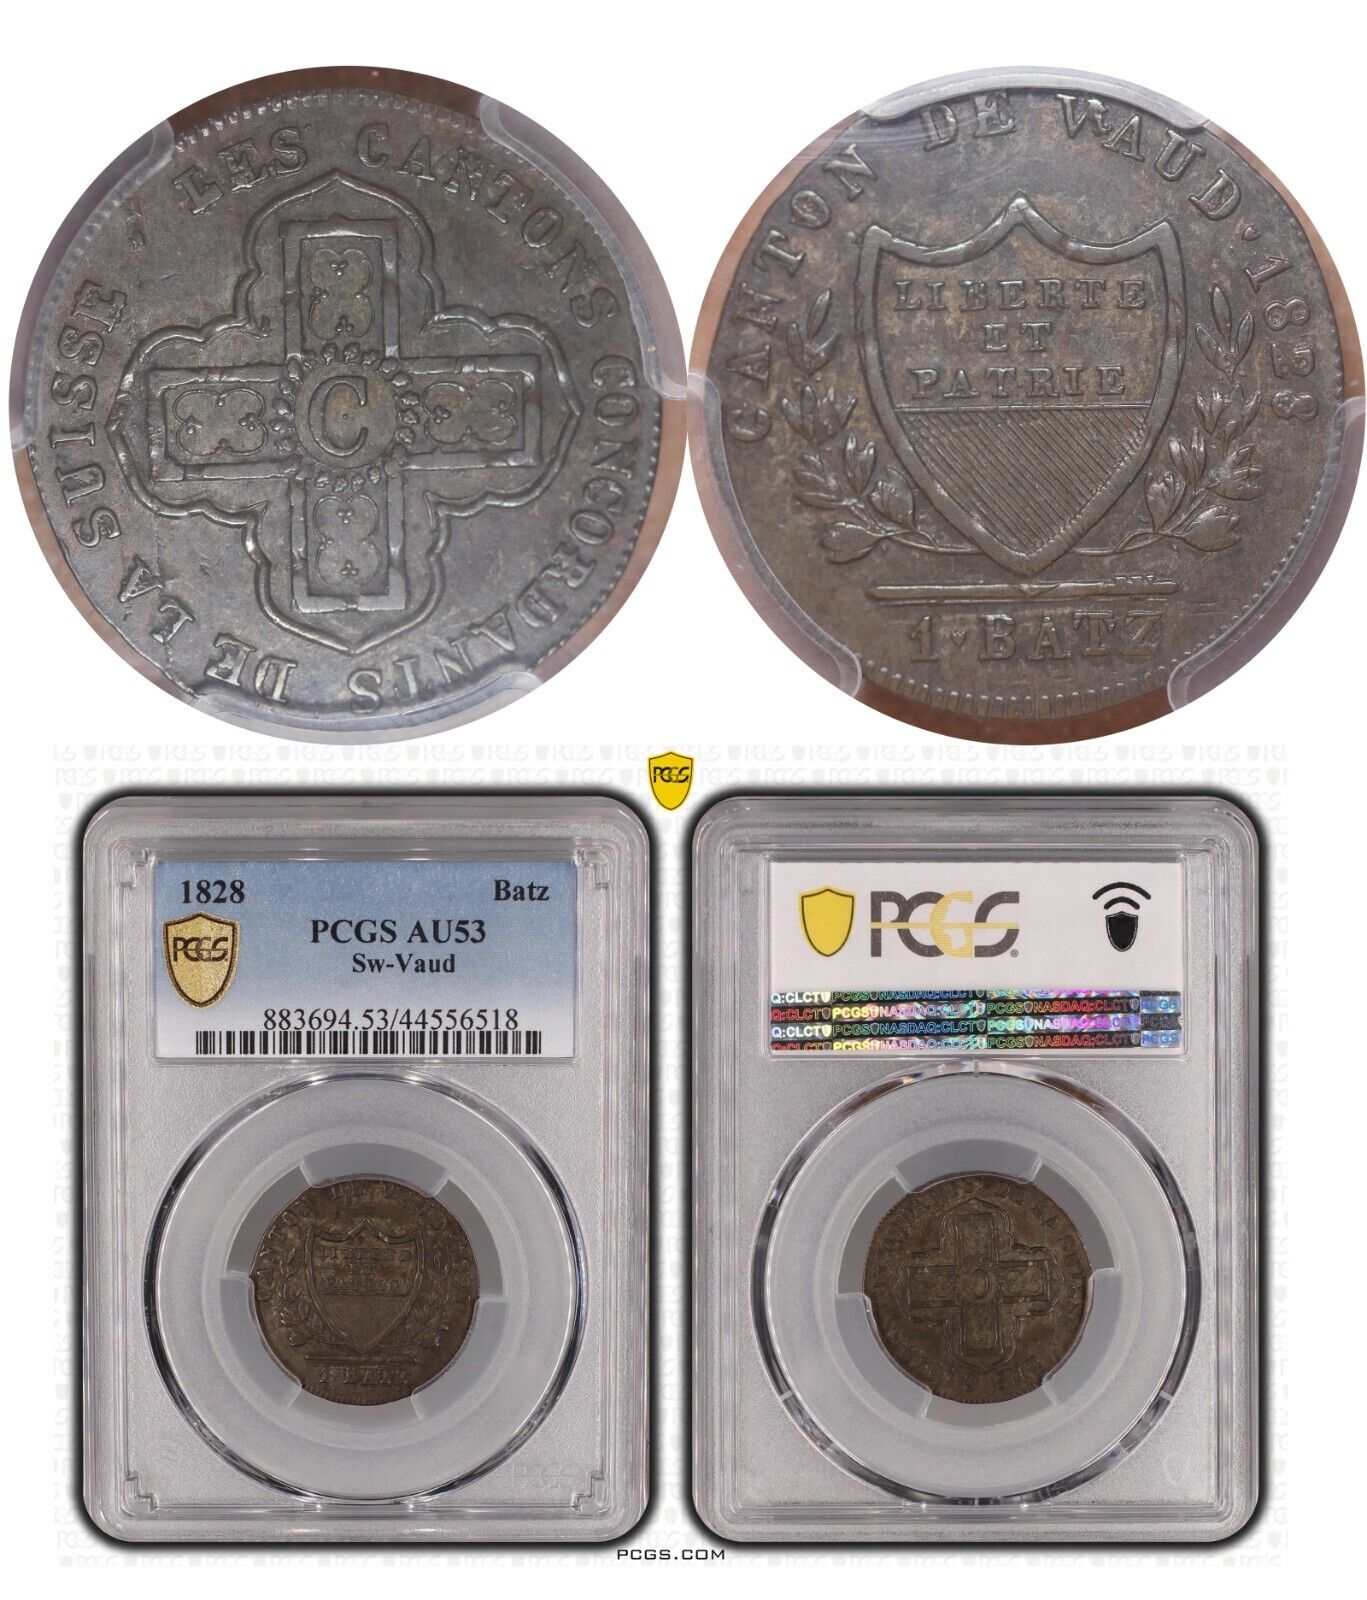 Pcgs Au53 1 Batzen 1828 Canton Of Vaud  Coin # 20